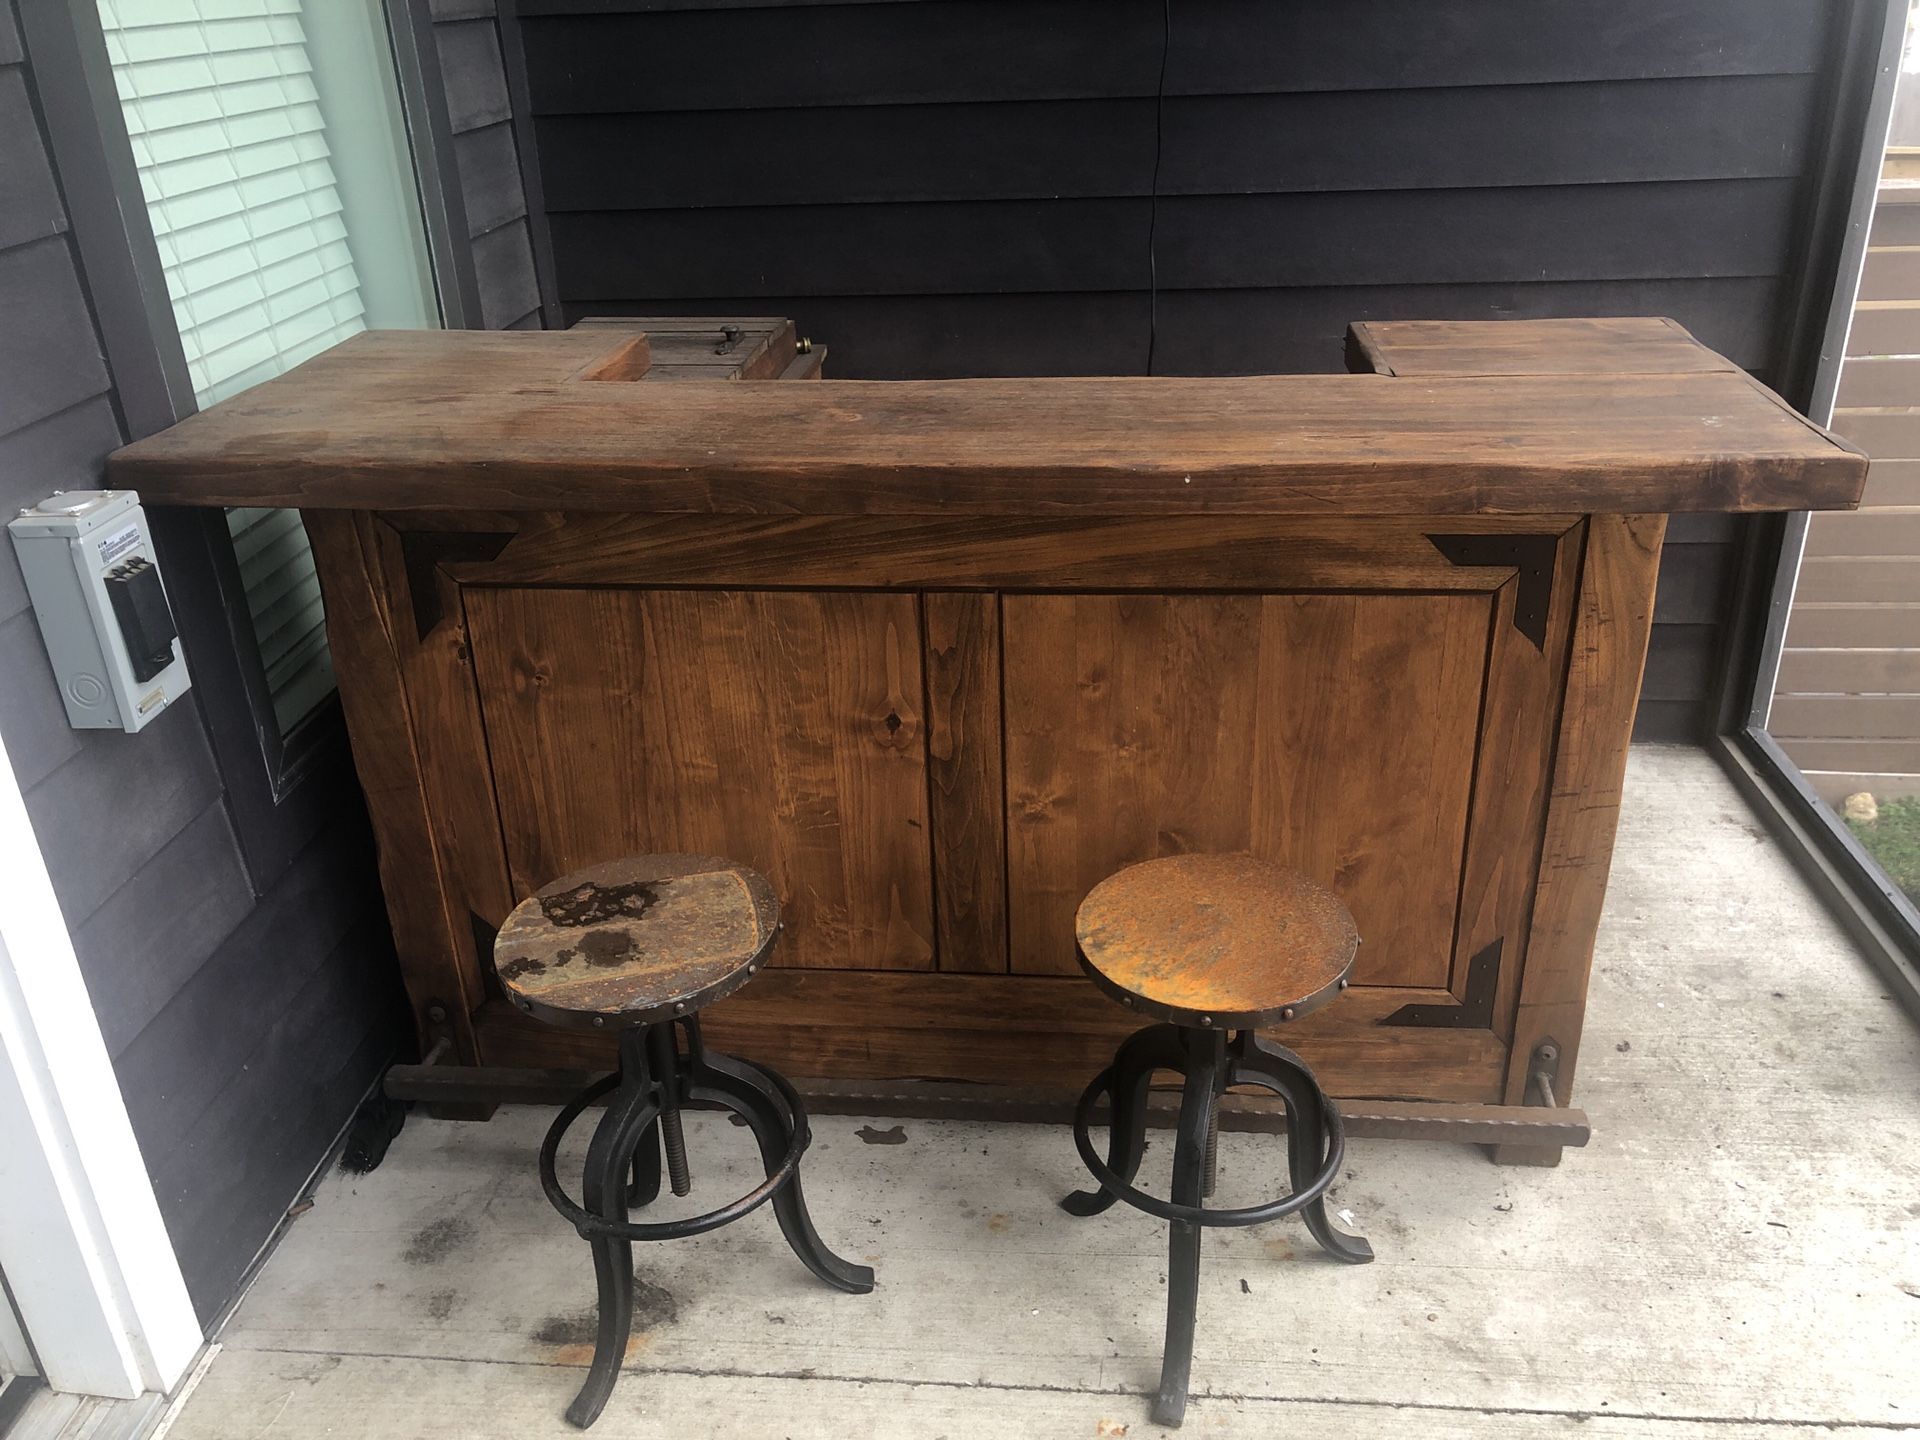 Wooden bar and stools